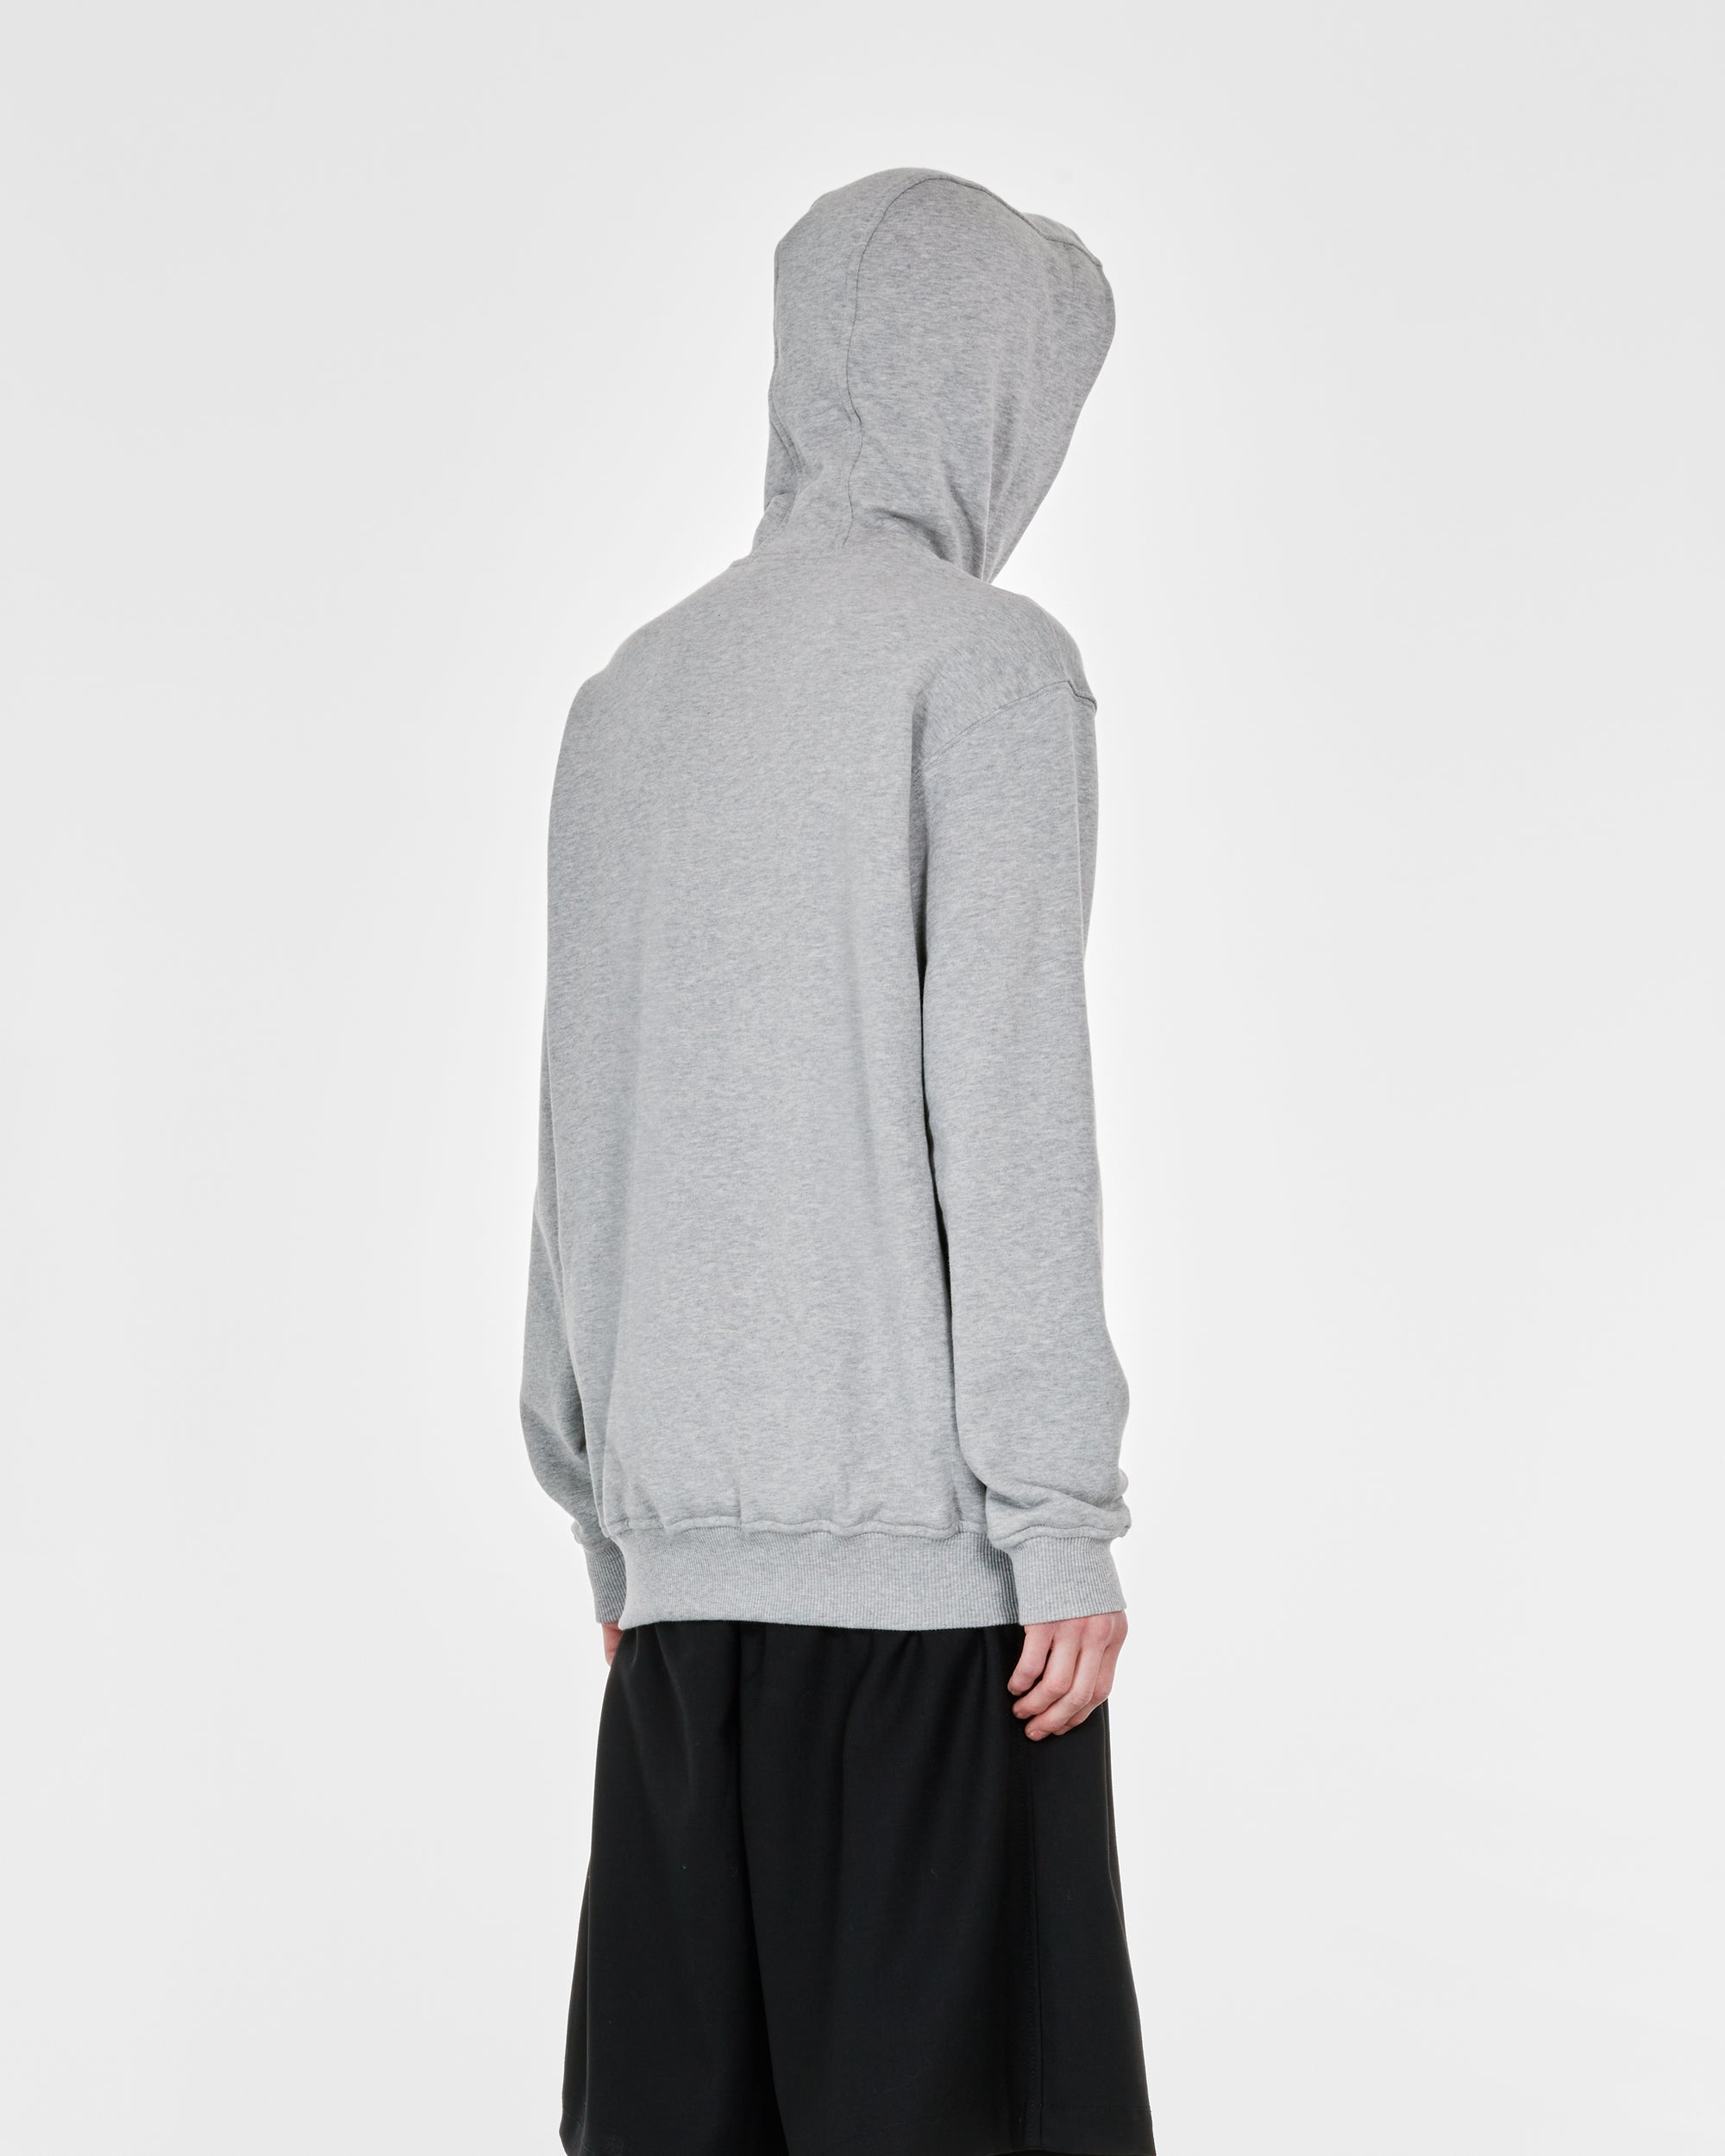 CDG Shirt - Andy Warhol Men's Hooded Sweatshirt (Grey/Print H) view 4